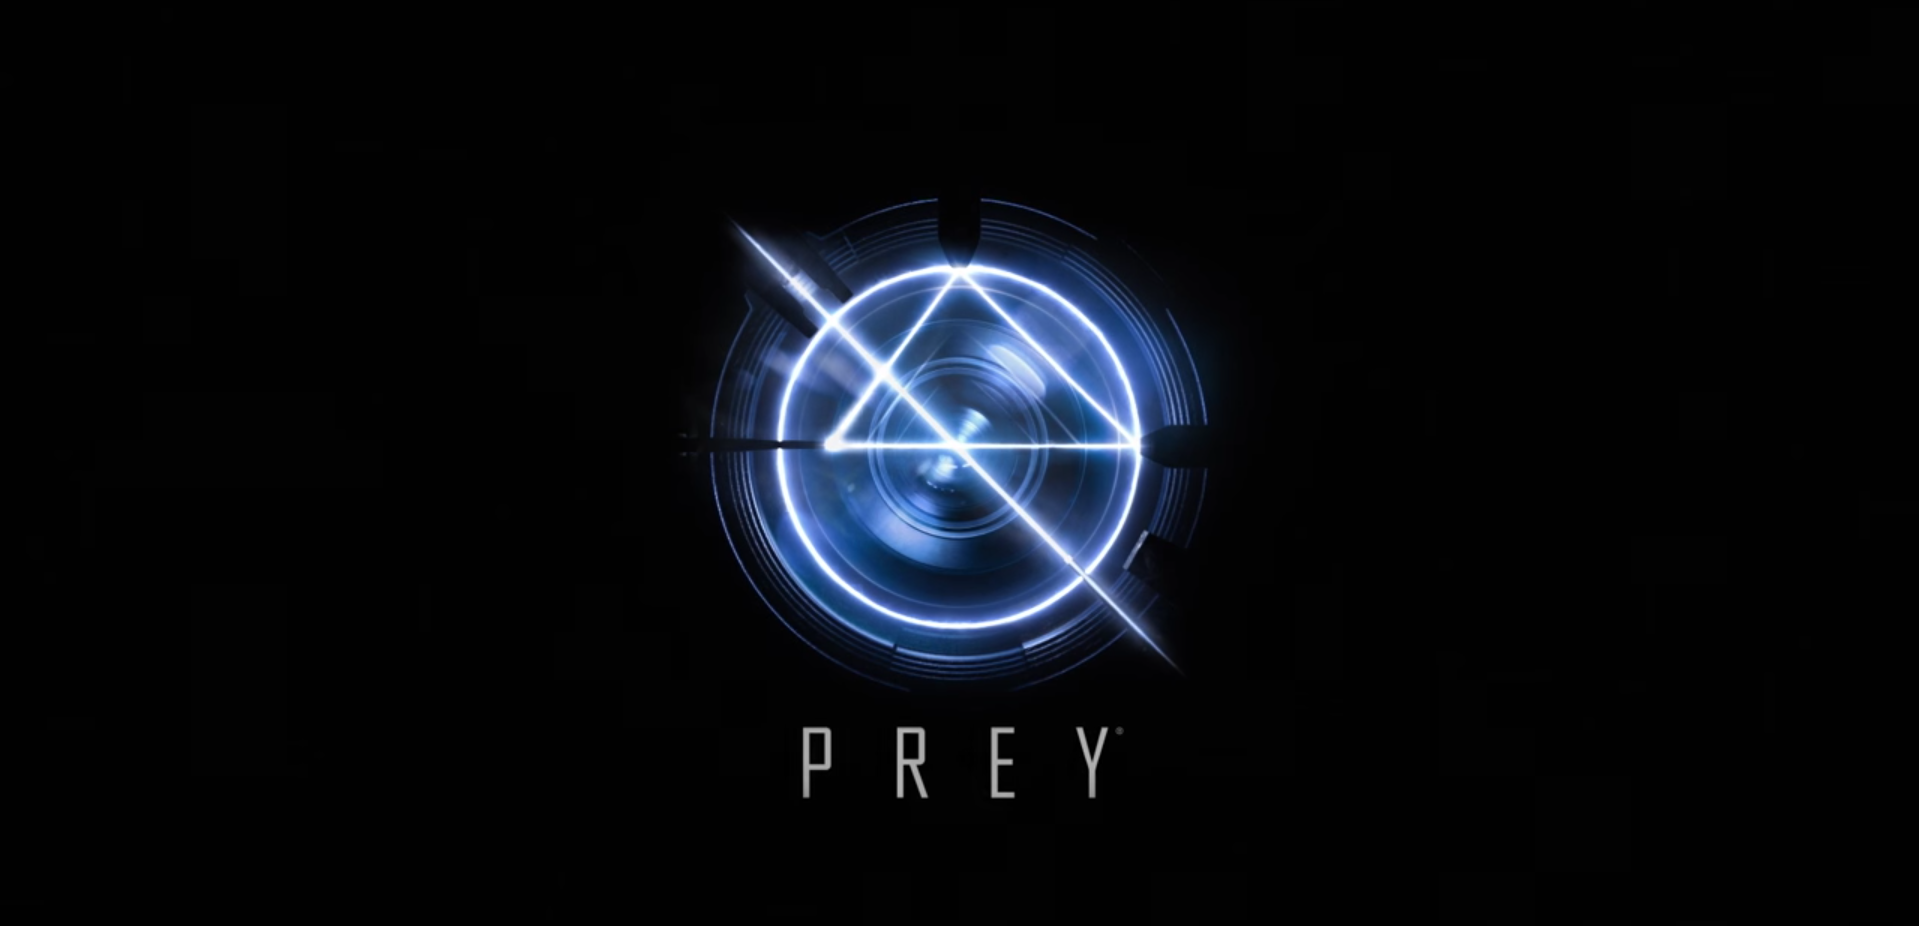 Primer tráiler con gameplay real de Prey publicado por Bethesda